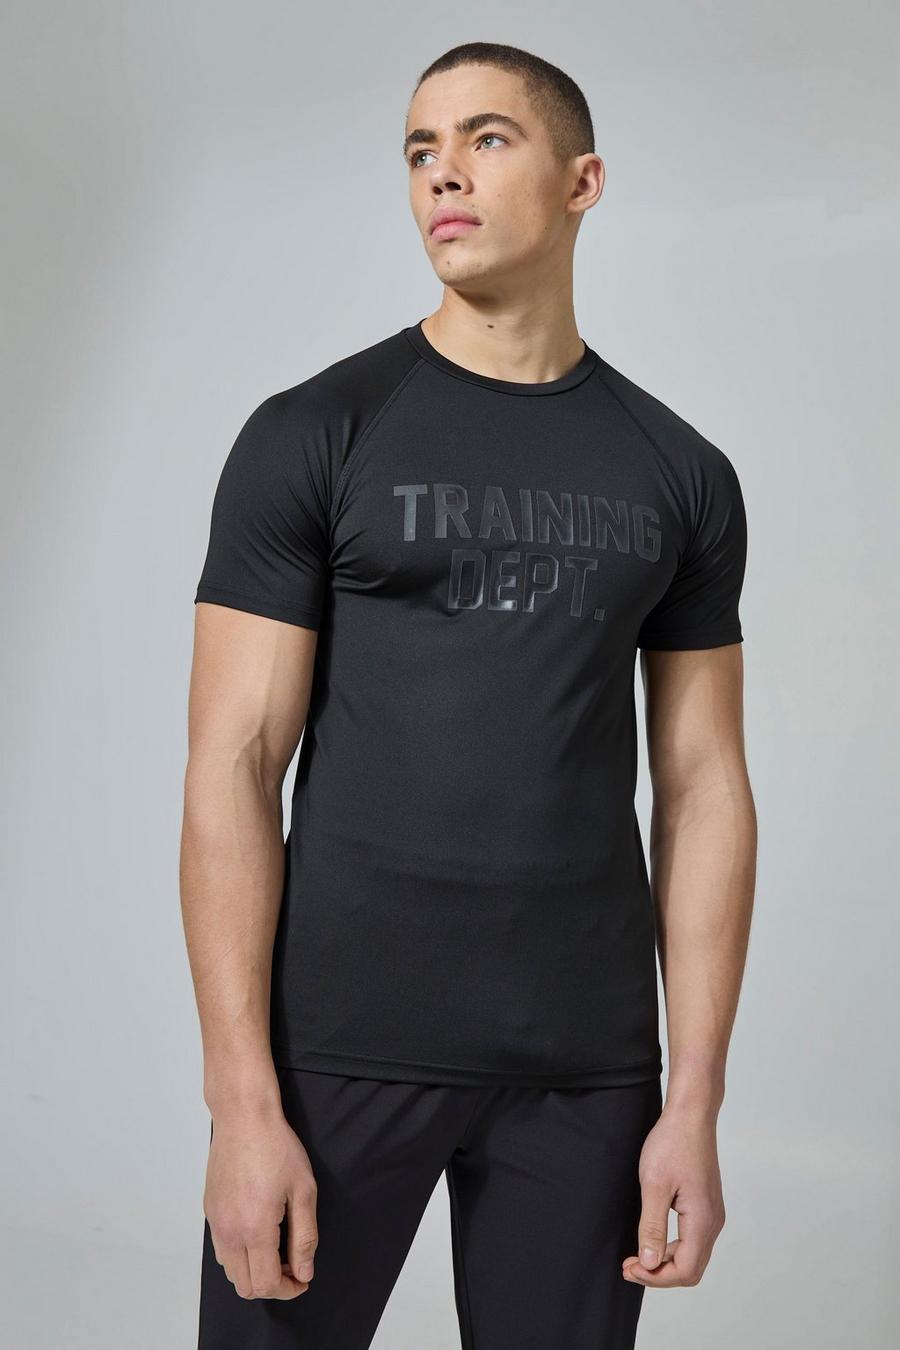 T-shirt attillata Active Training Dept, Black image number 1